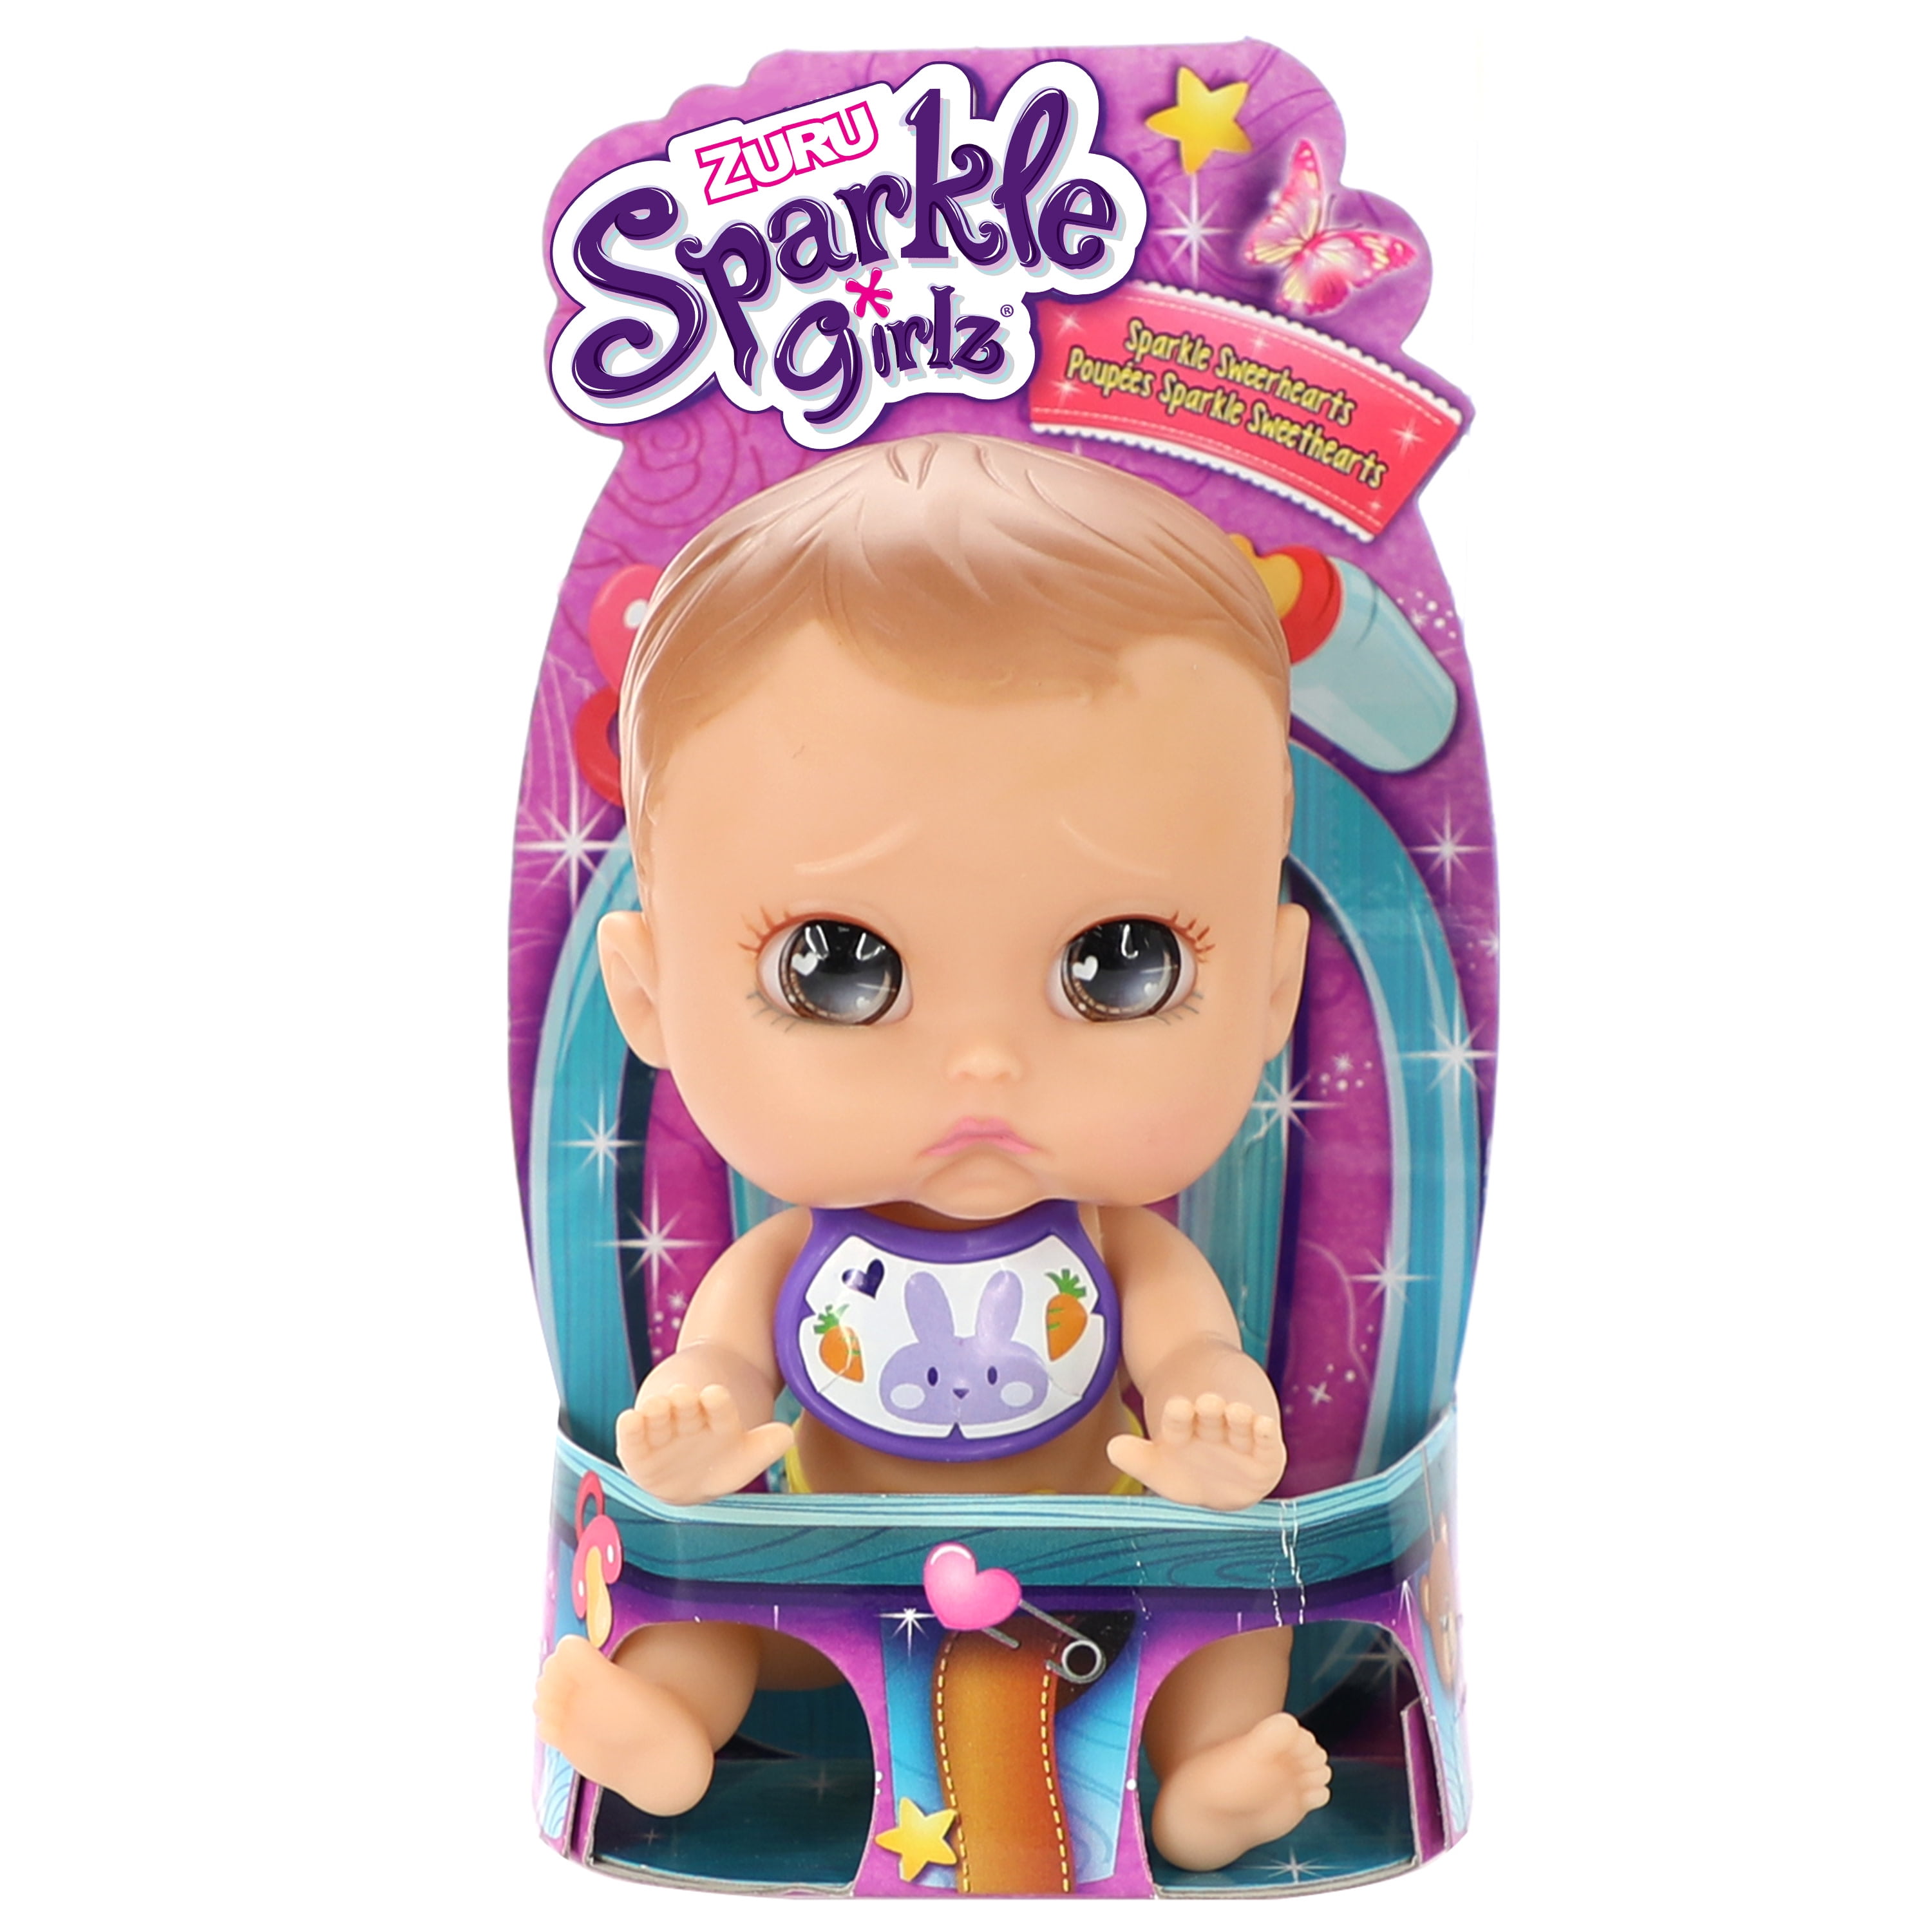 Zuru Sparkle Girlz Sparkle Sweethearts Talking Baby Cute Toy Age 2+ 